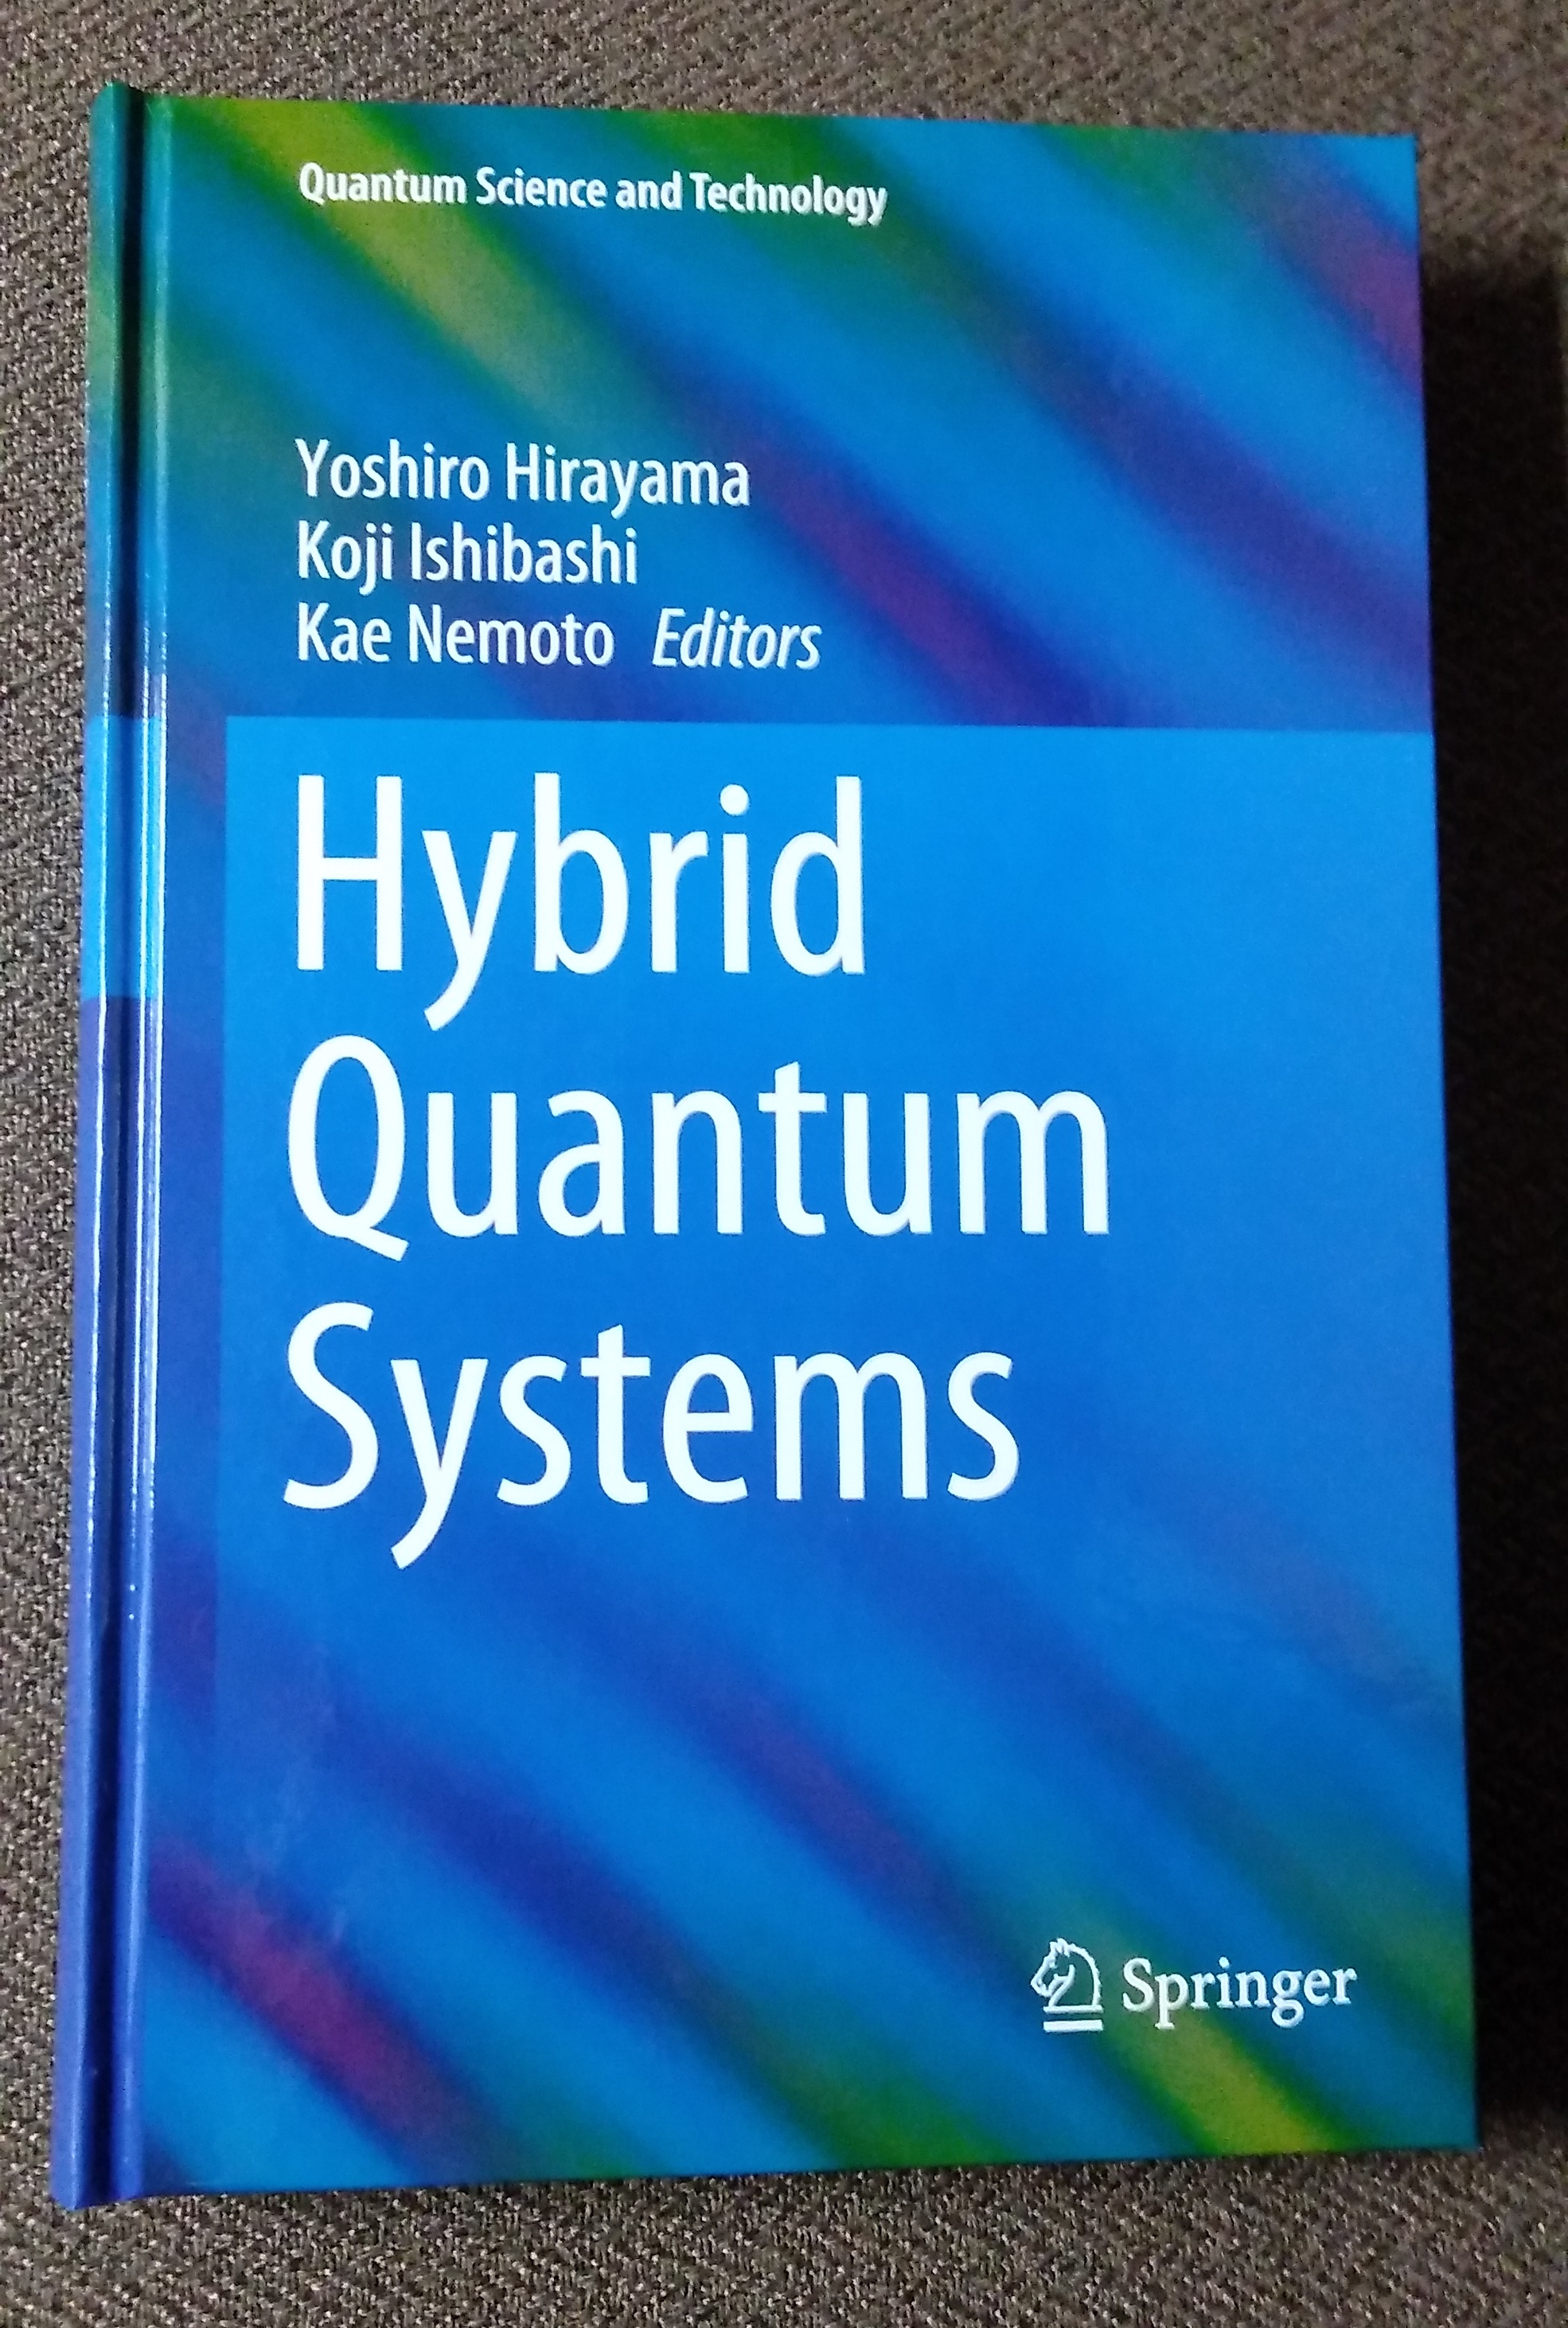 「Hybrid Quantum Systems」